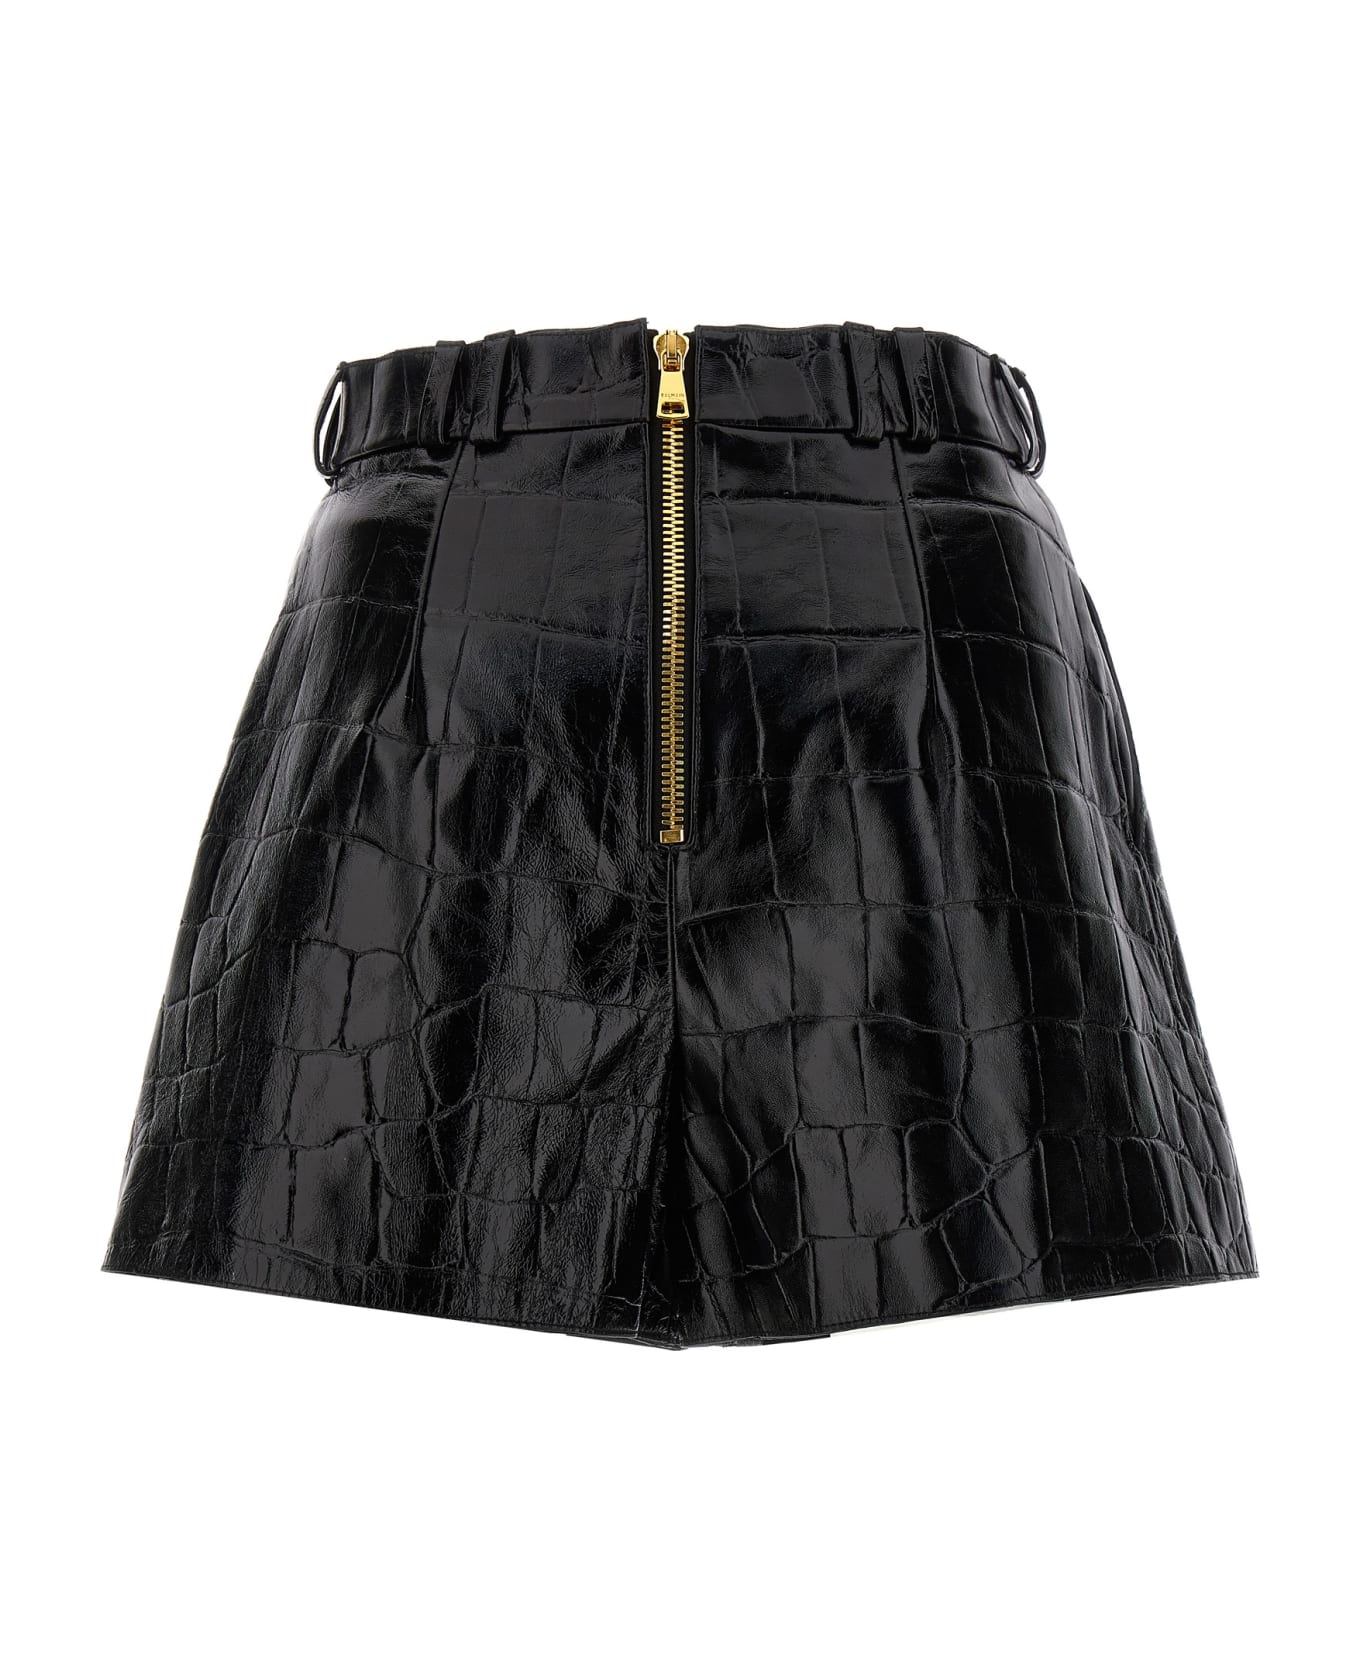 Balmain Leather Shorts - Black ショートパンツ